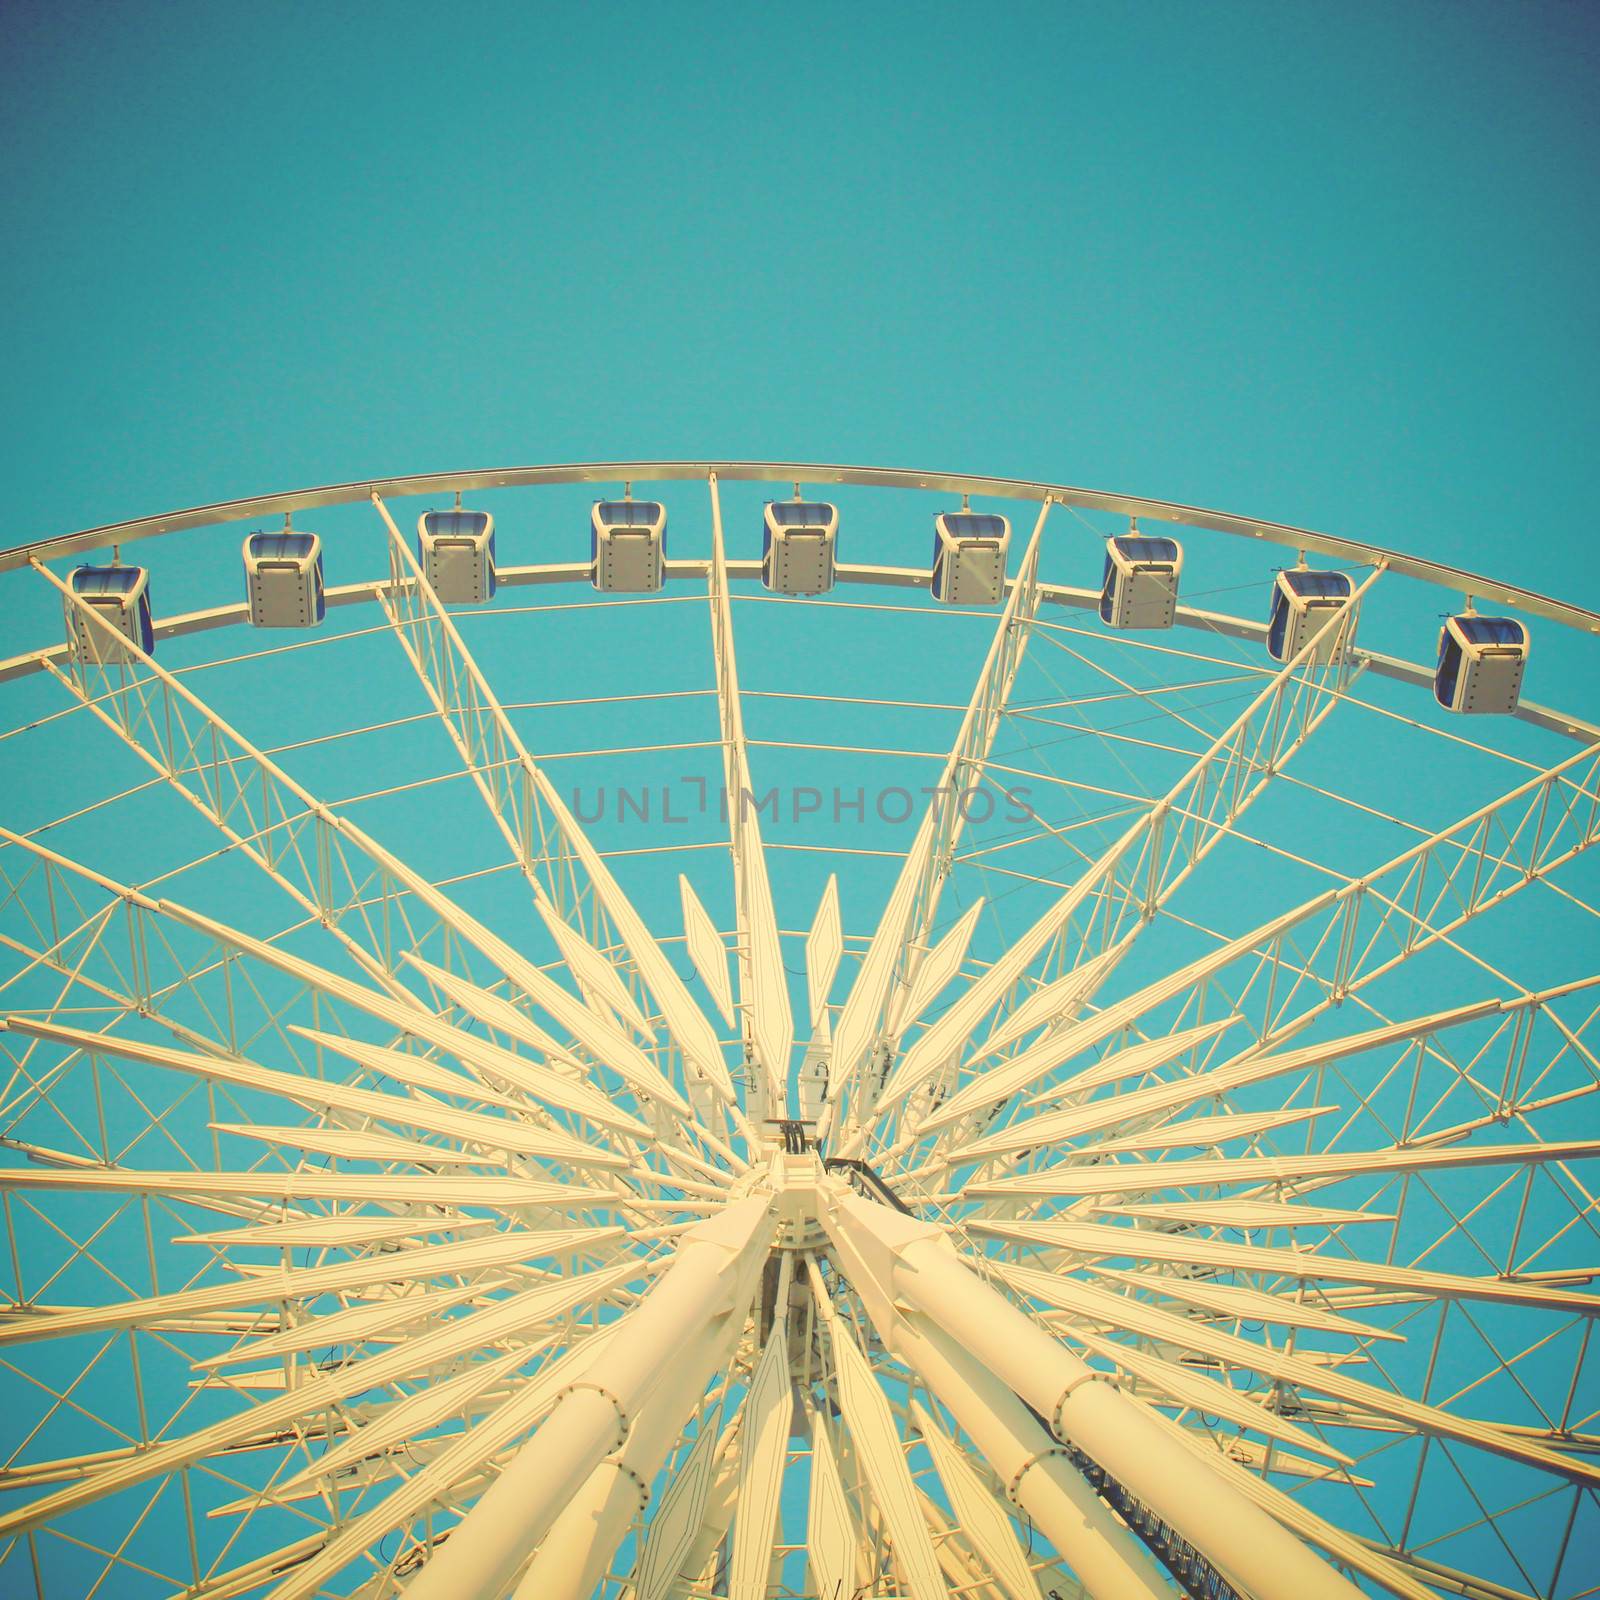 Ferris wheel with retro filter effect